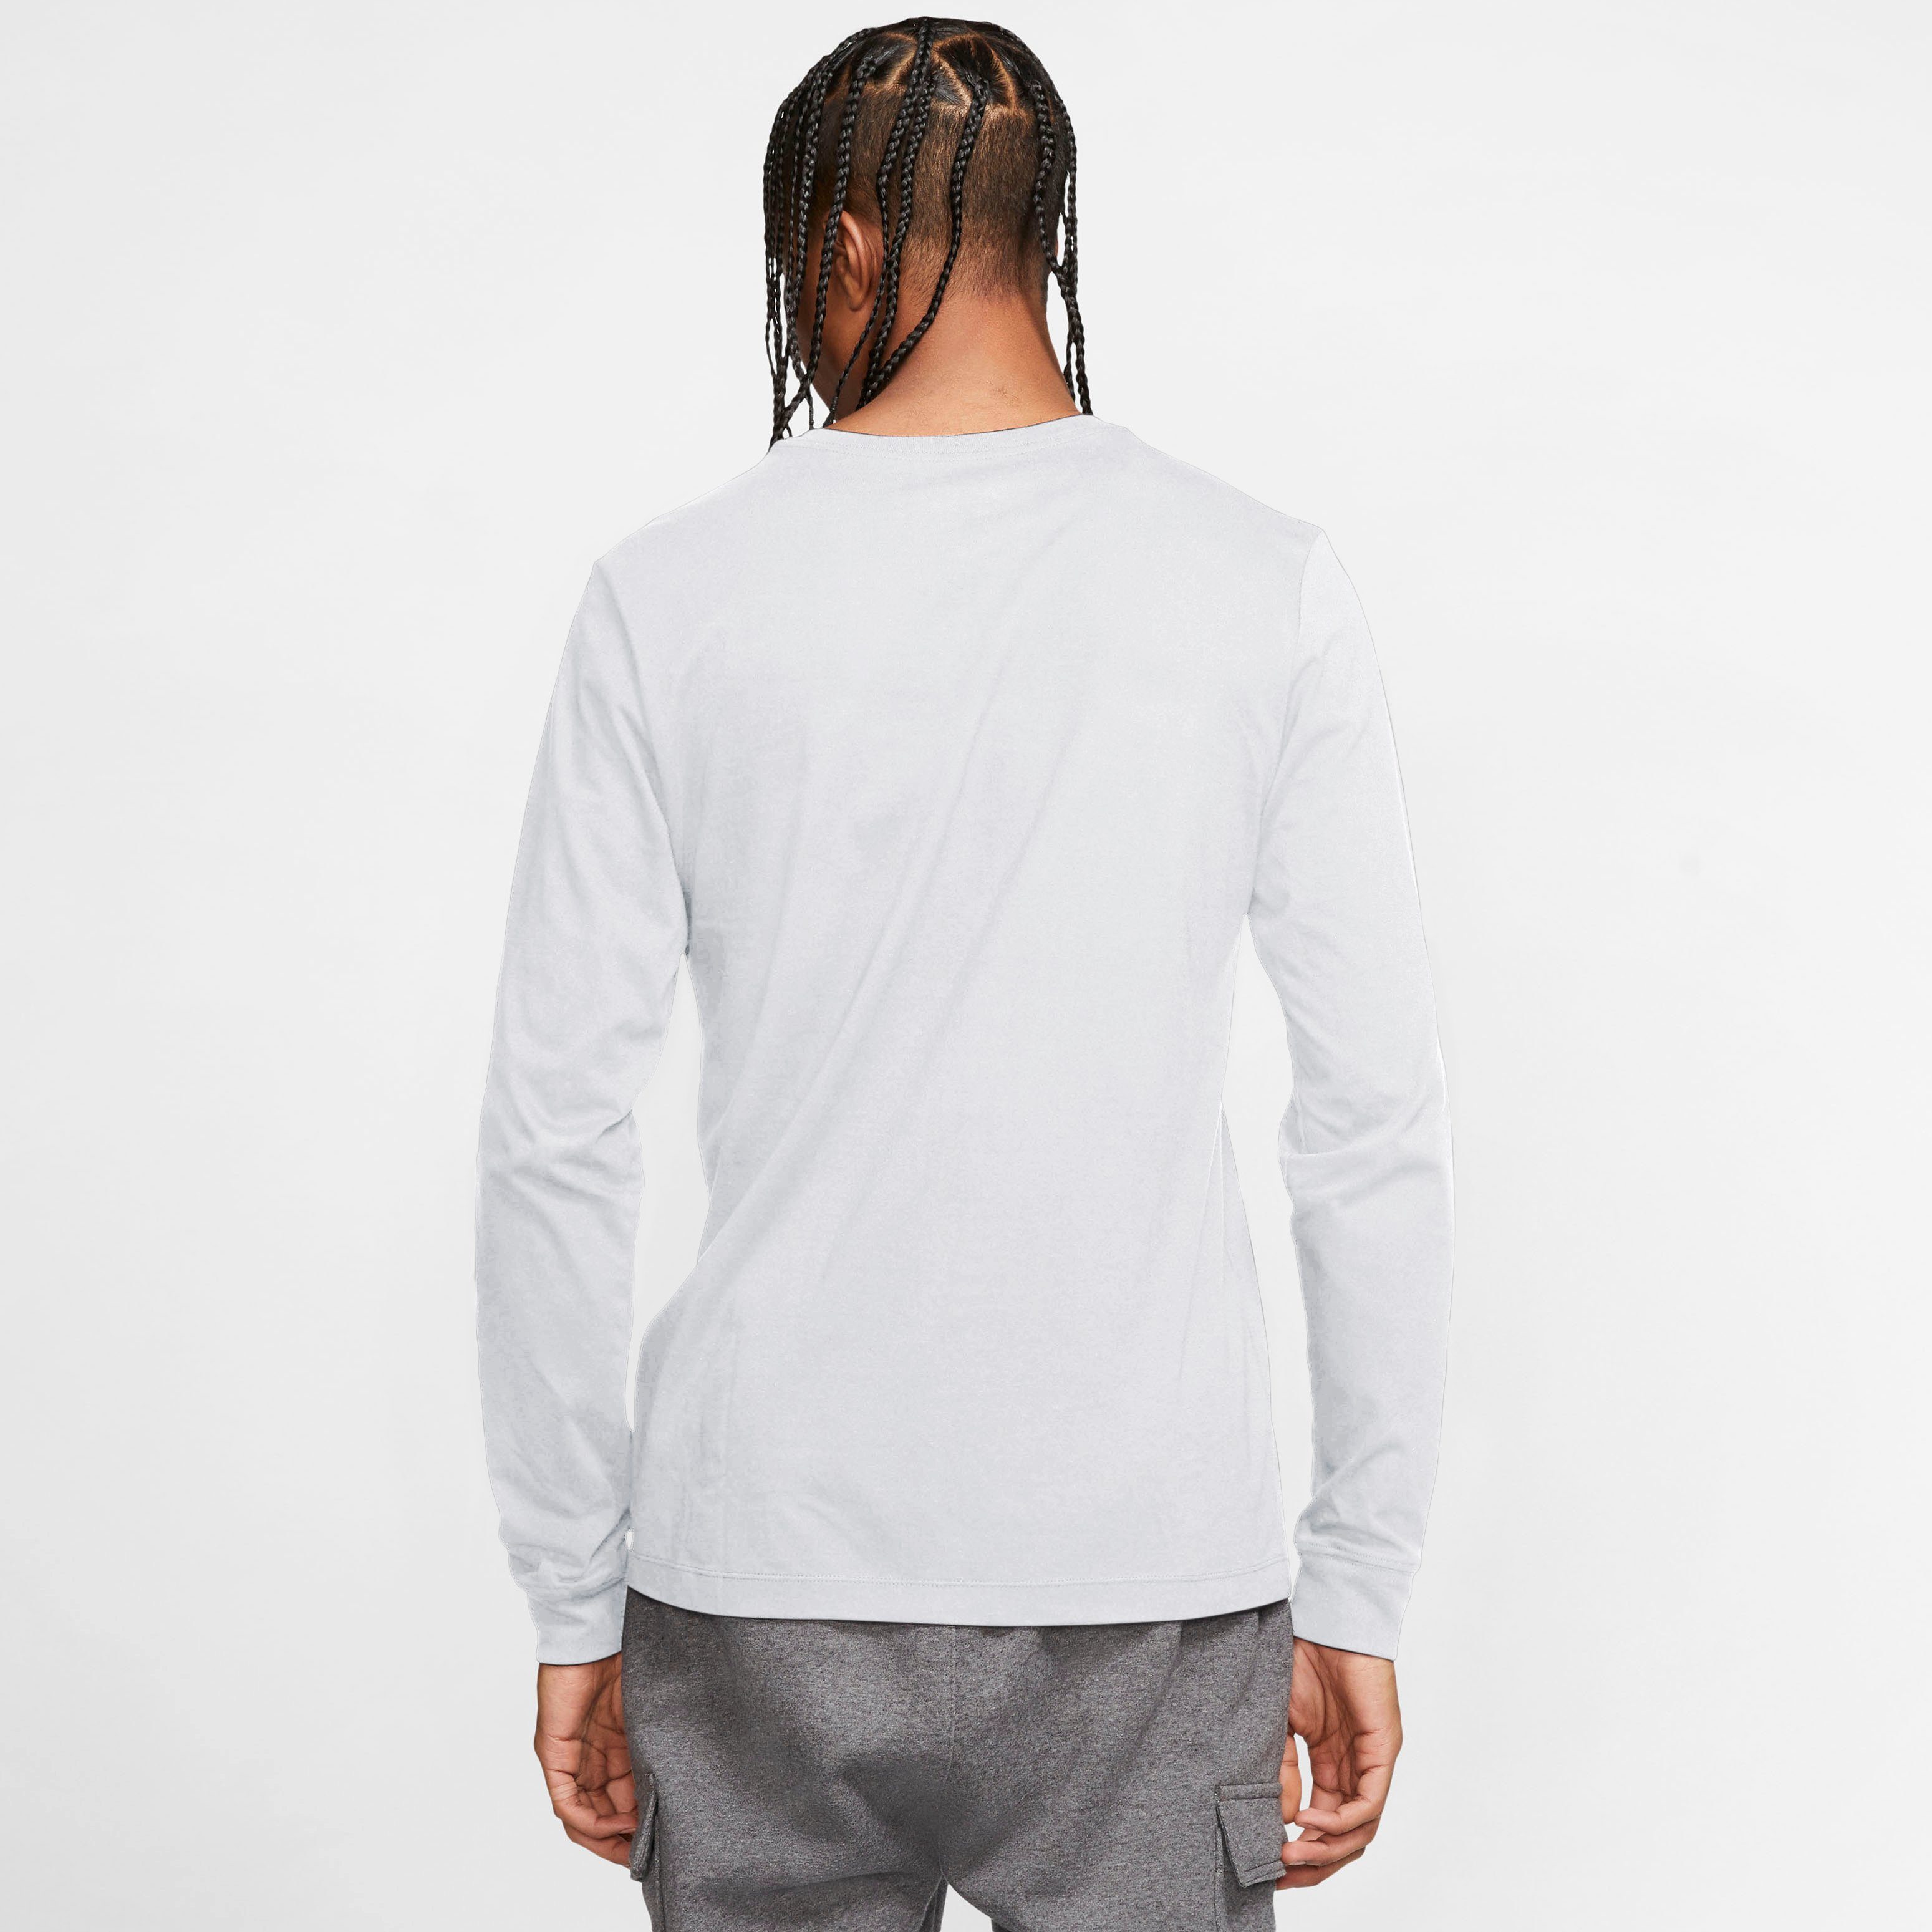 Nike Sportswear Langarmshirt MEN'S LONG-SLEEVE T-SHIRT weiß